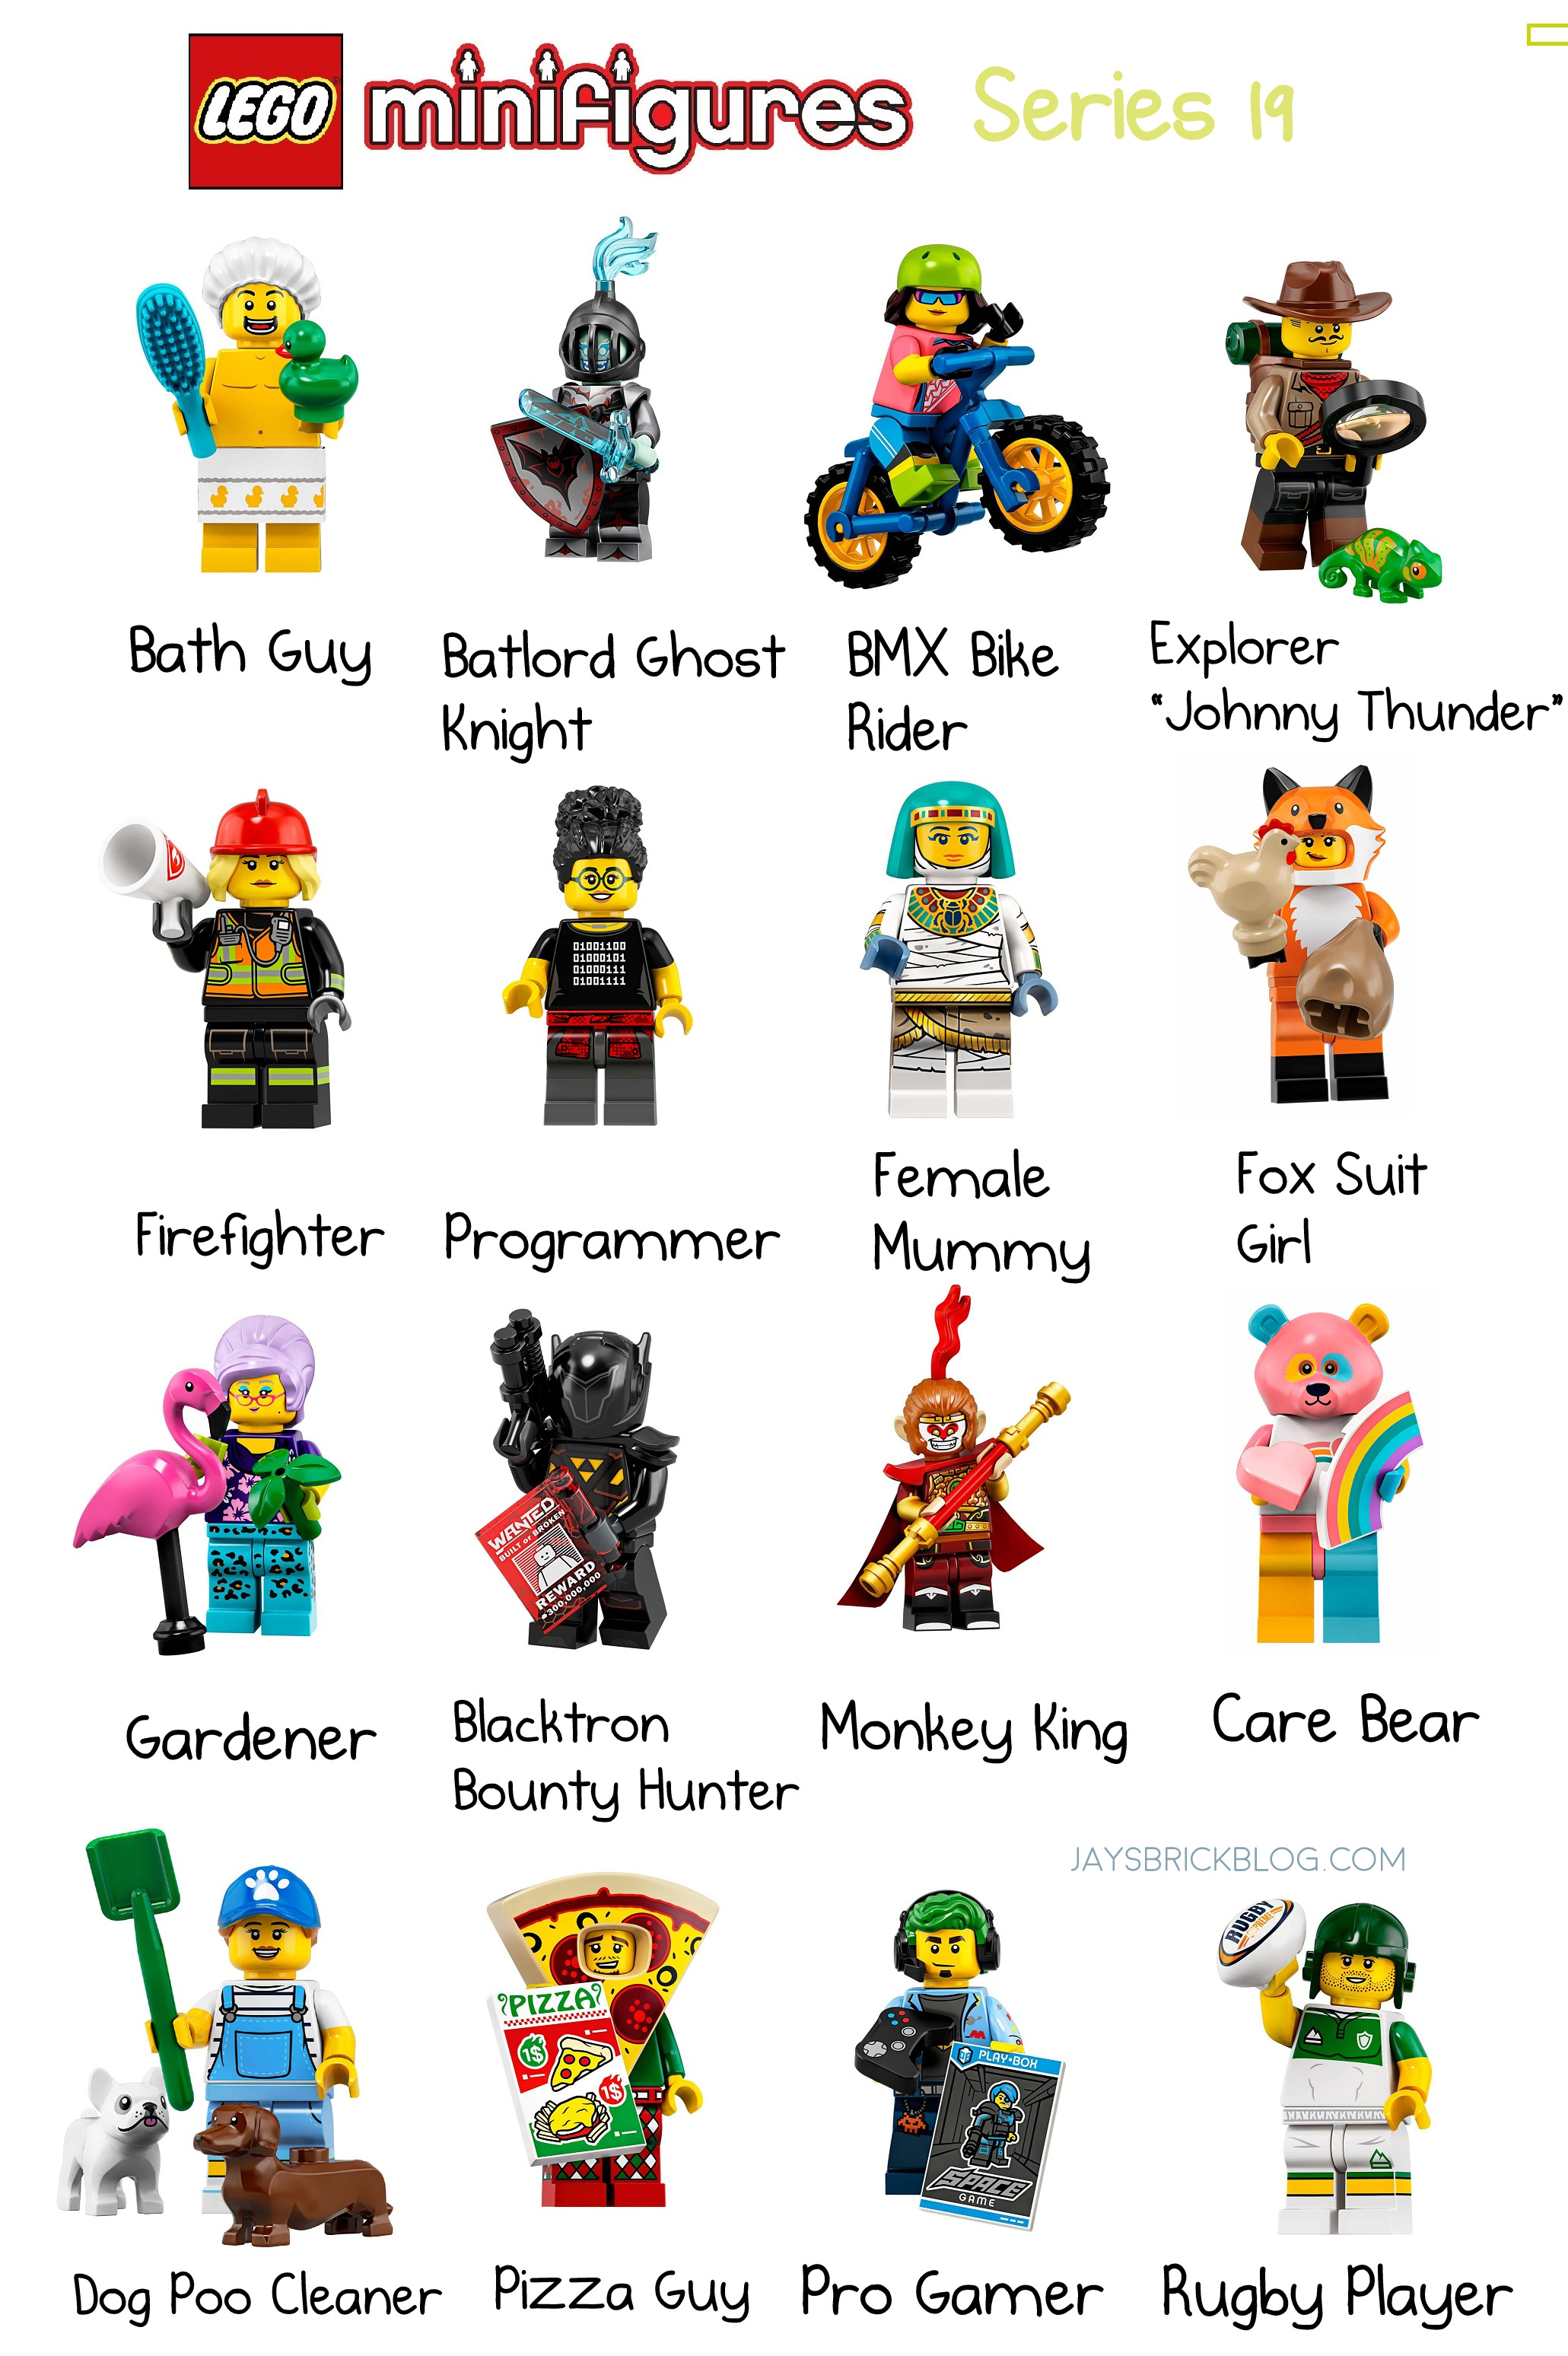 LEGO Minifigures Series 19 revealed! - Jay's Brick